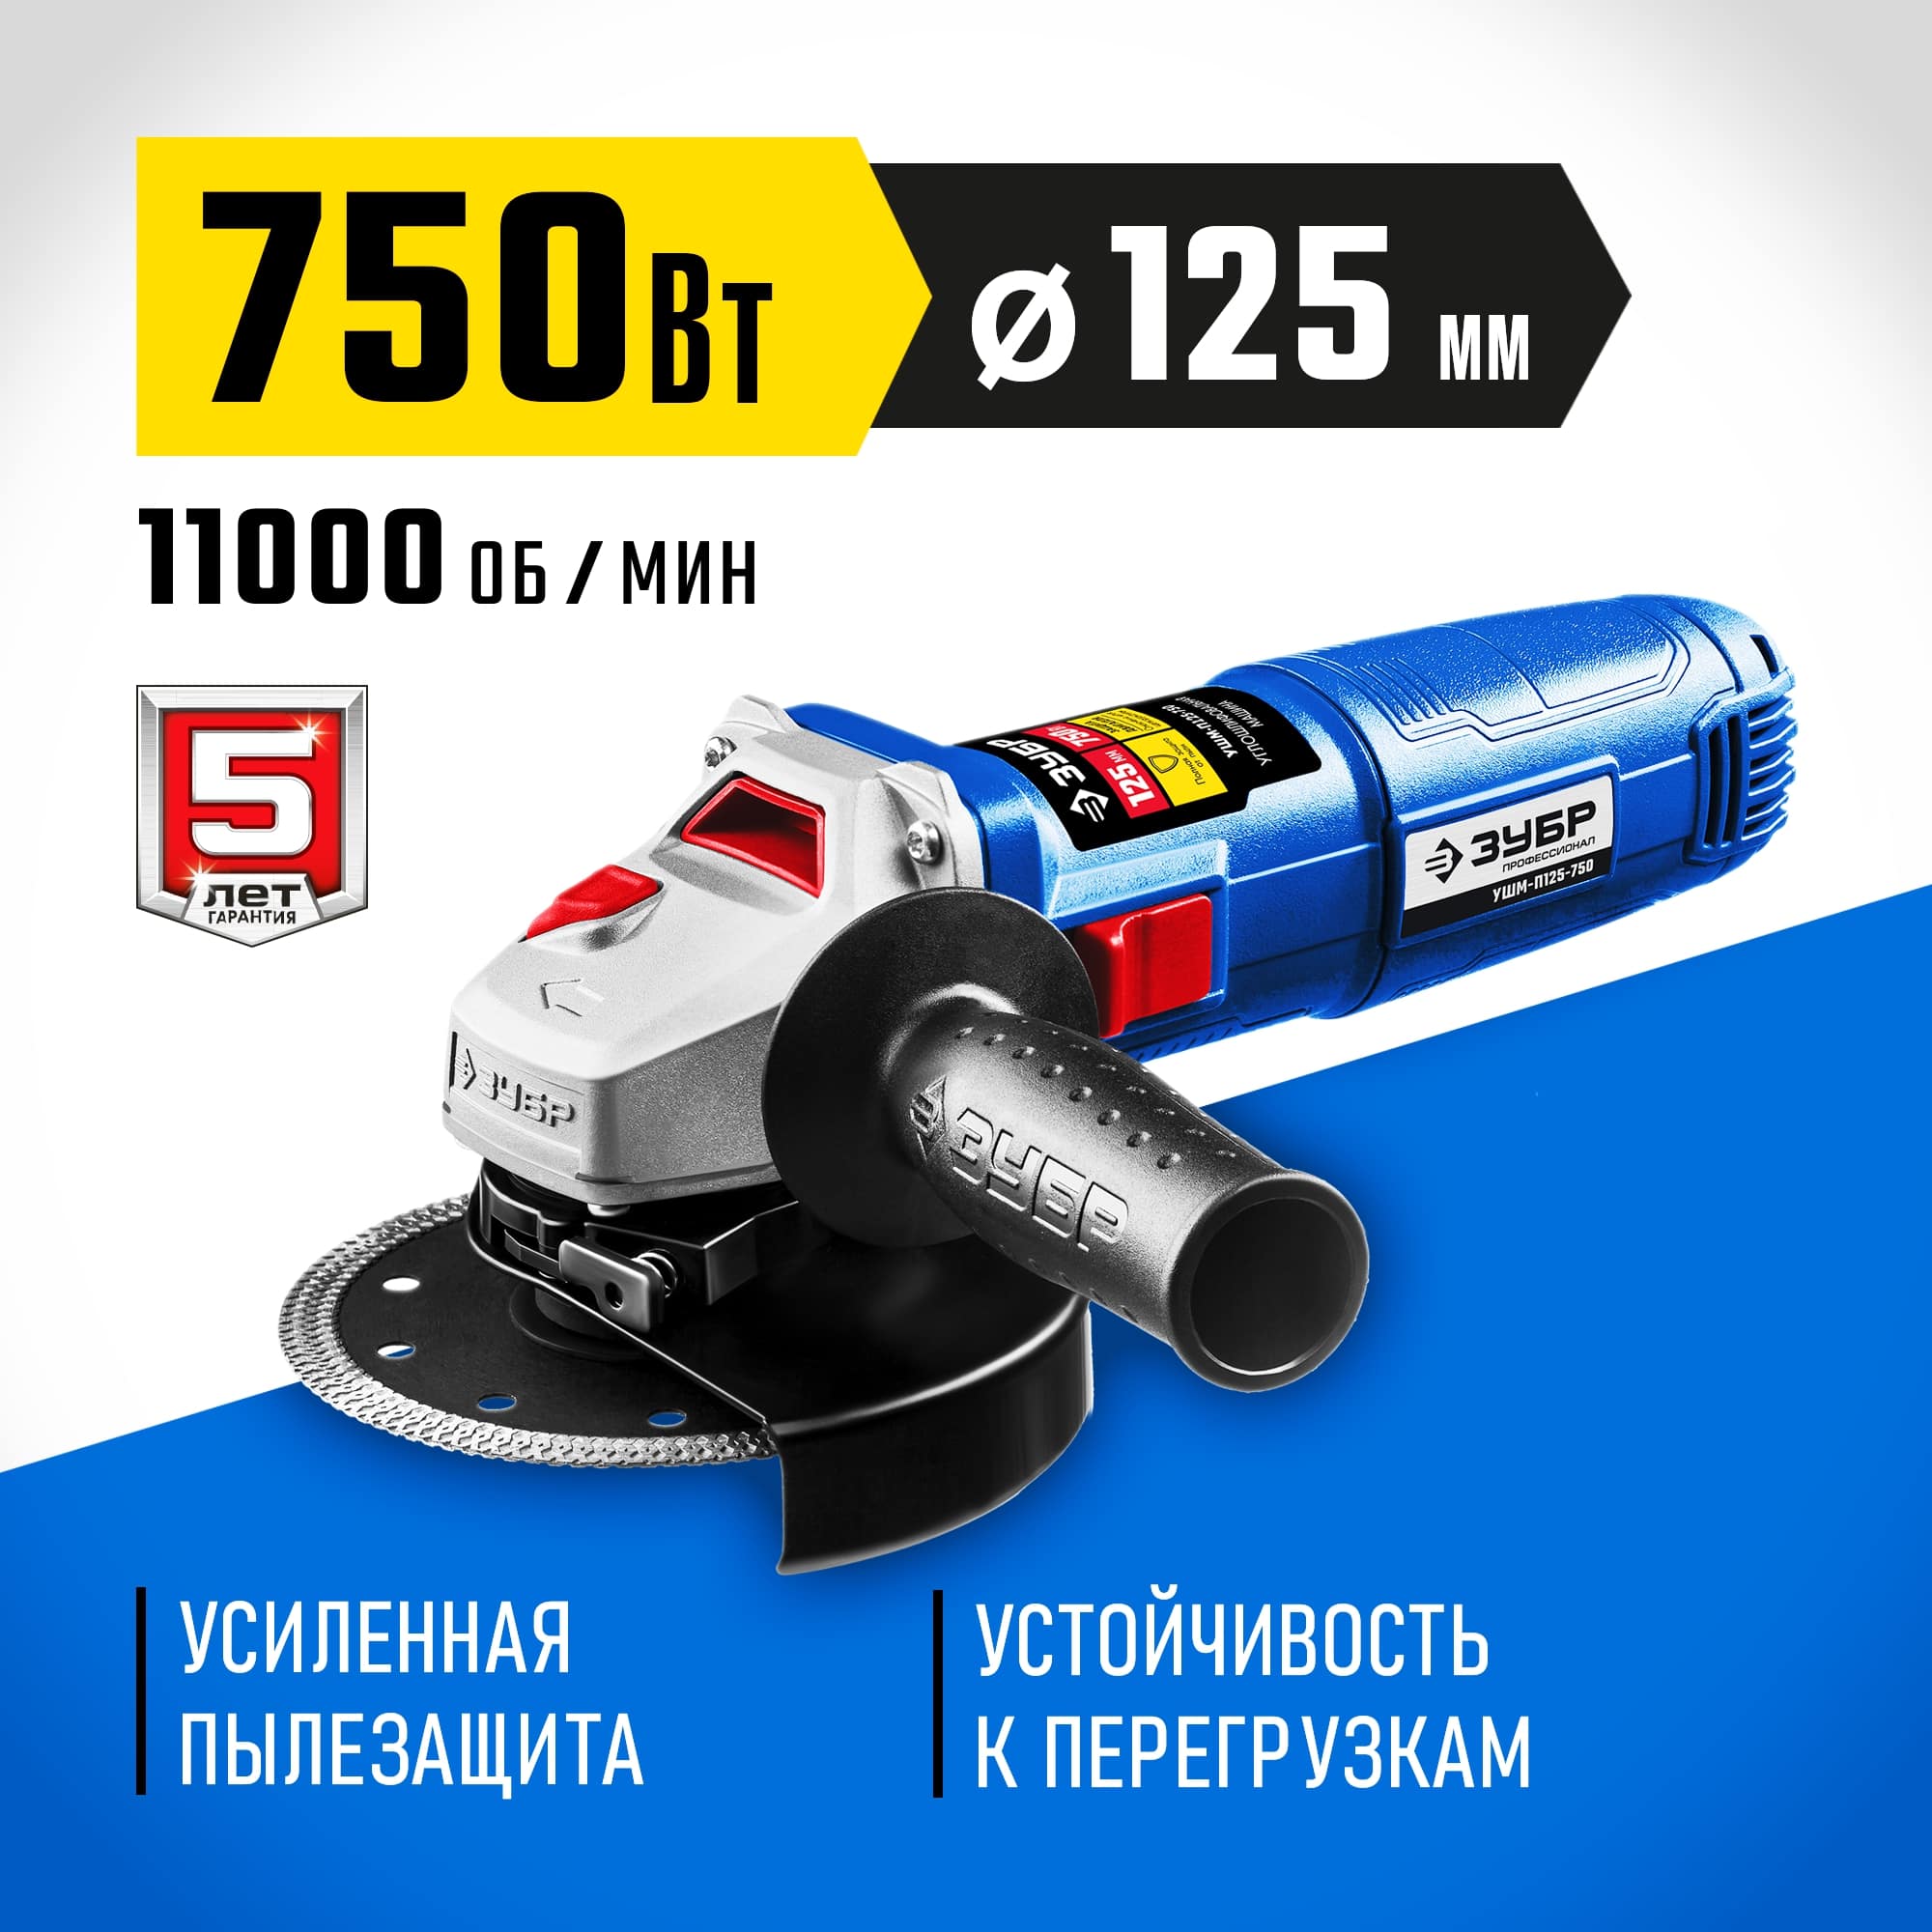 Цены на болгарку УШМ 125